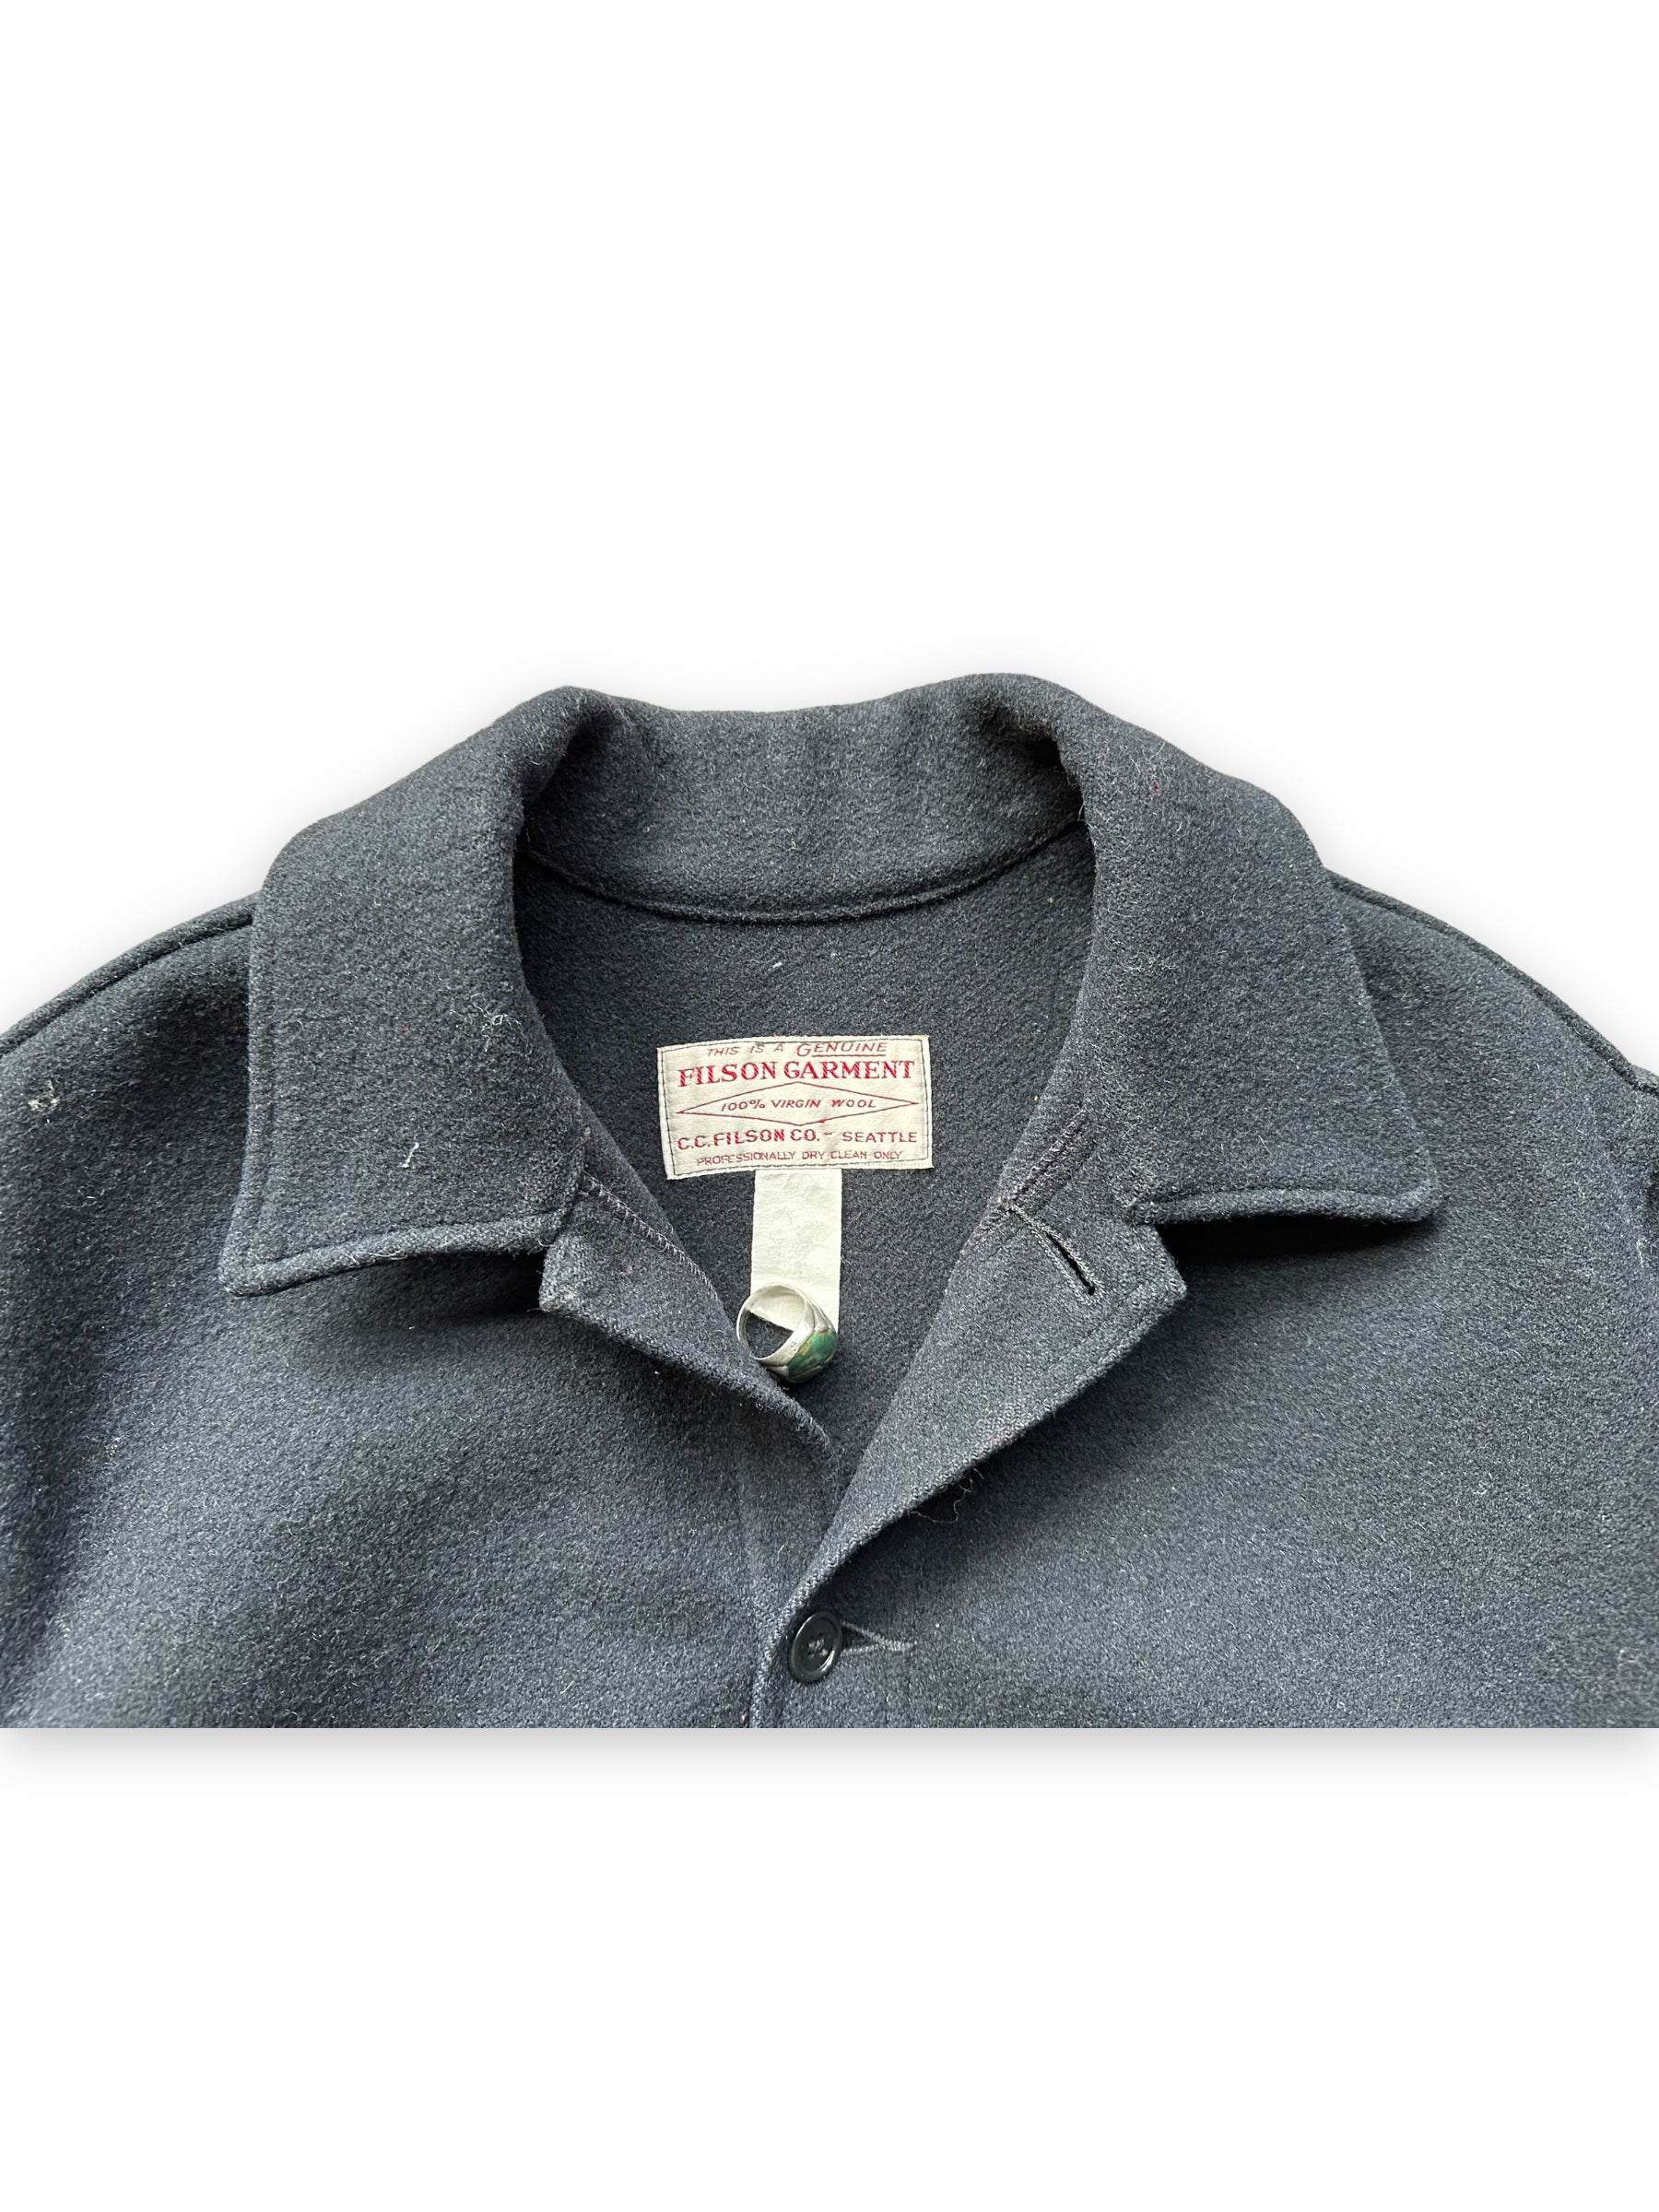 Tag View of Black Filson Mackinaw Cruiser SZ 48 |  Barn Owl Vintage Goods | Vintage Workwear Seattle